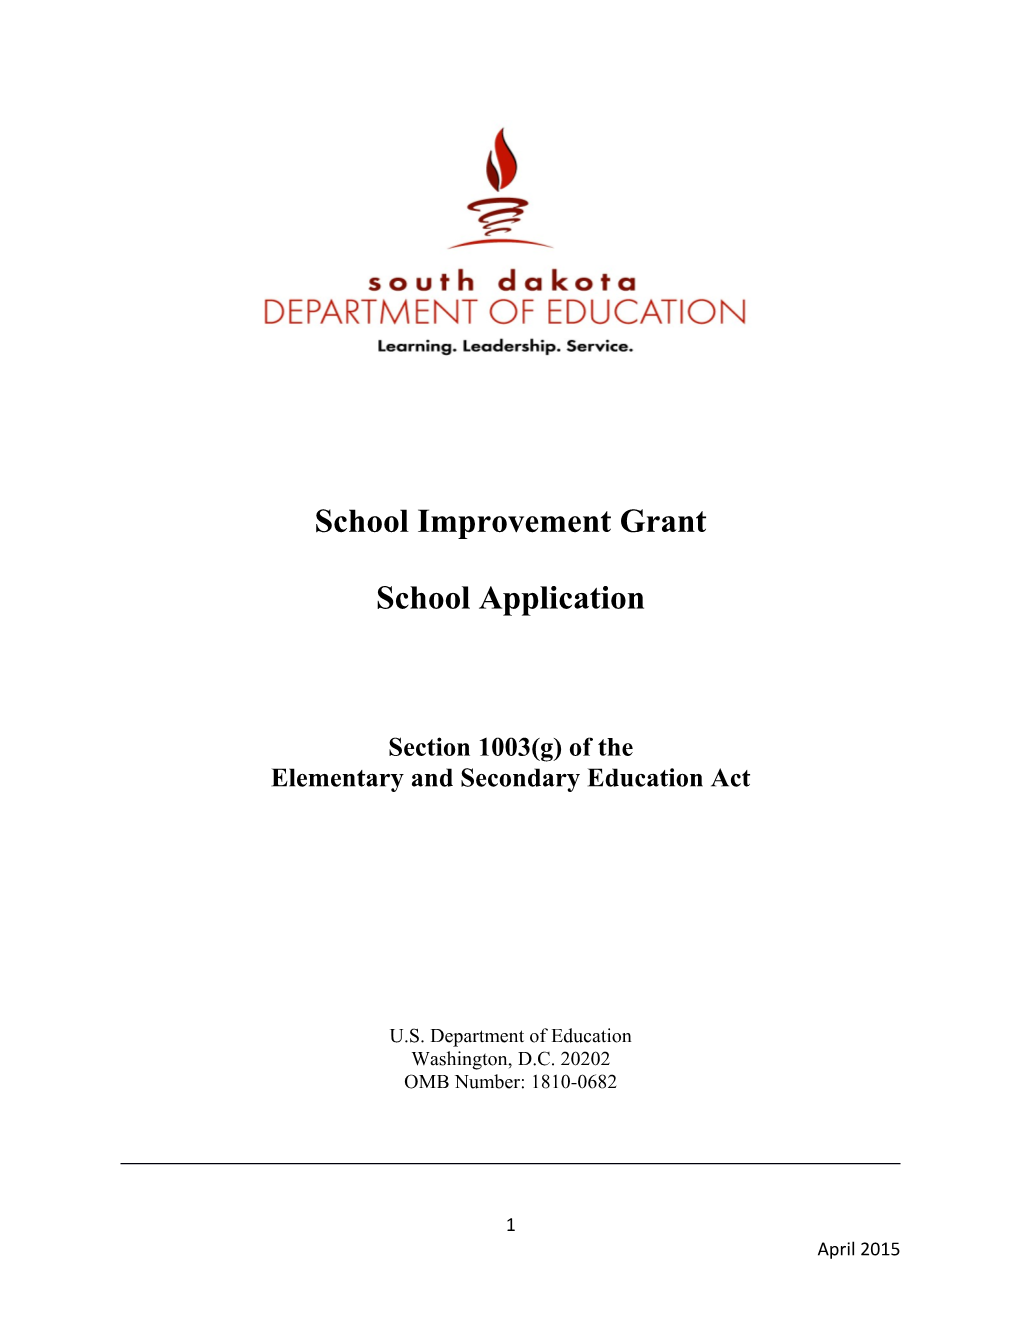 School Improvement Grant s1